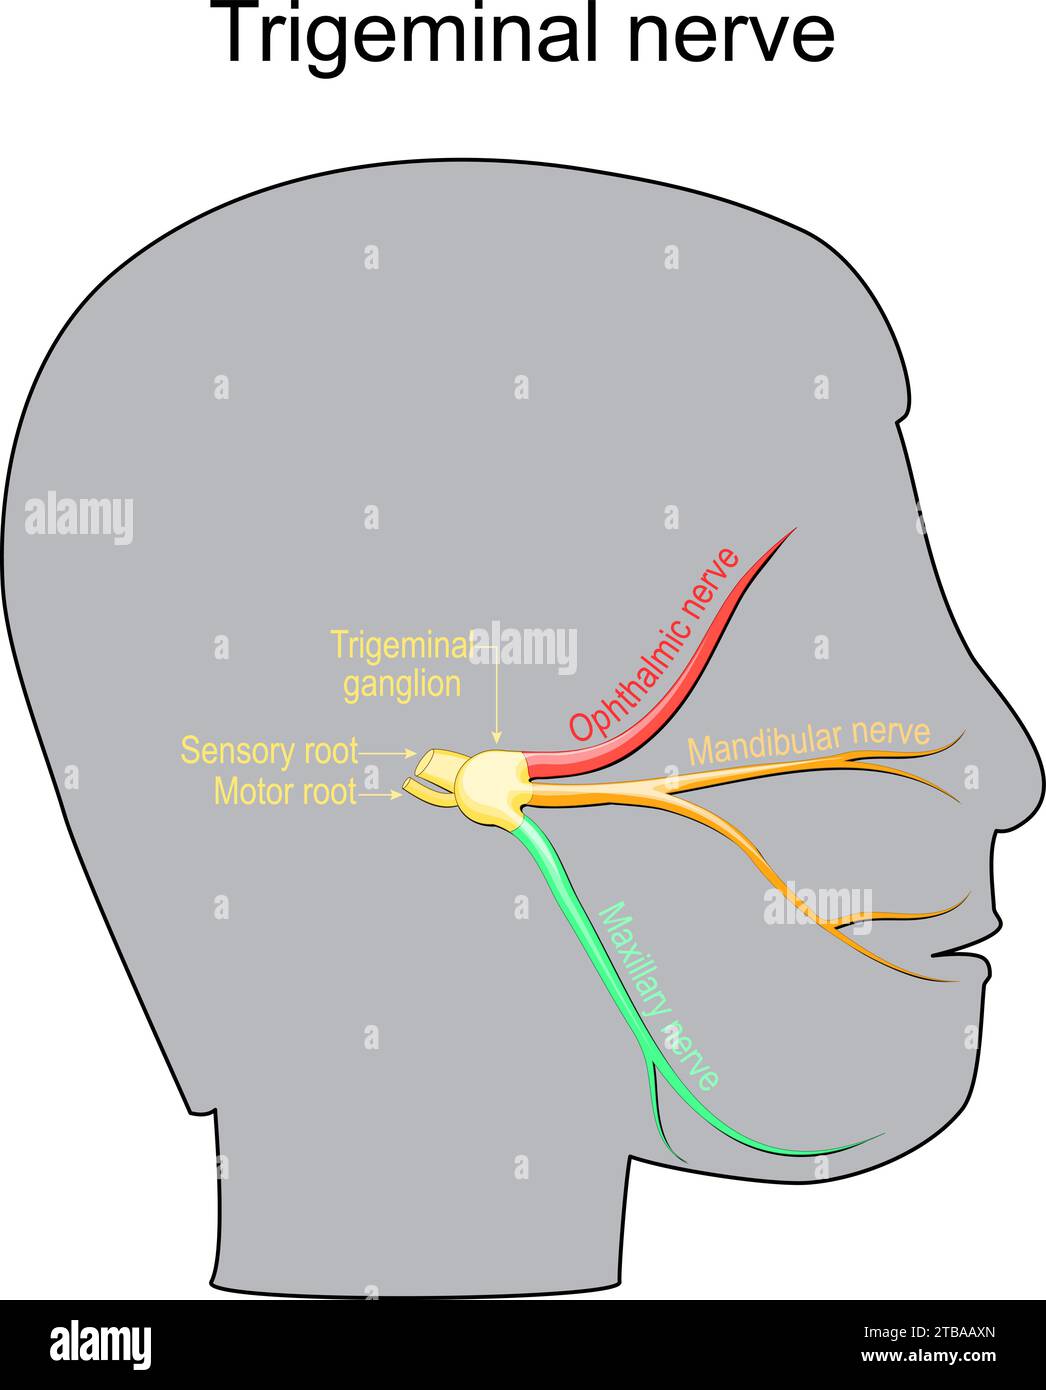 Trigeminal neuralgia. Cranial nerve. Human head with Trigeminal ganglion, Motor and Sensory root, ophthalmic, mandibular and maxillary nerves. Periphe Stock Vector